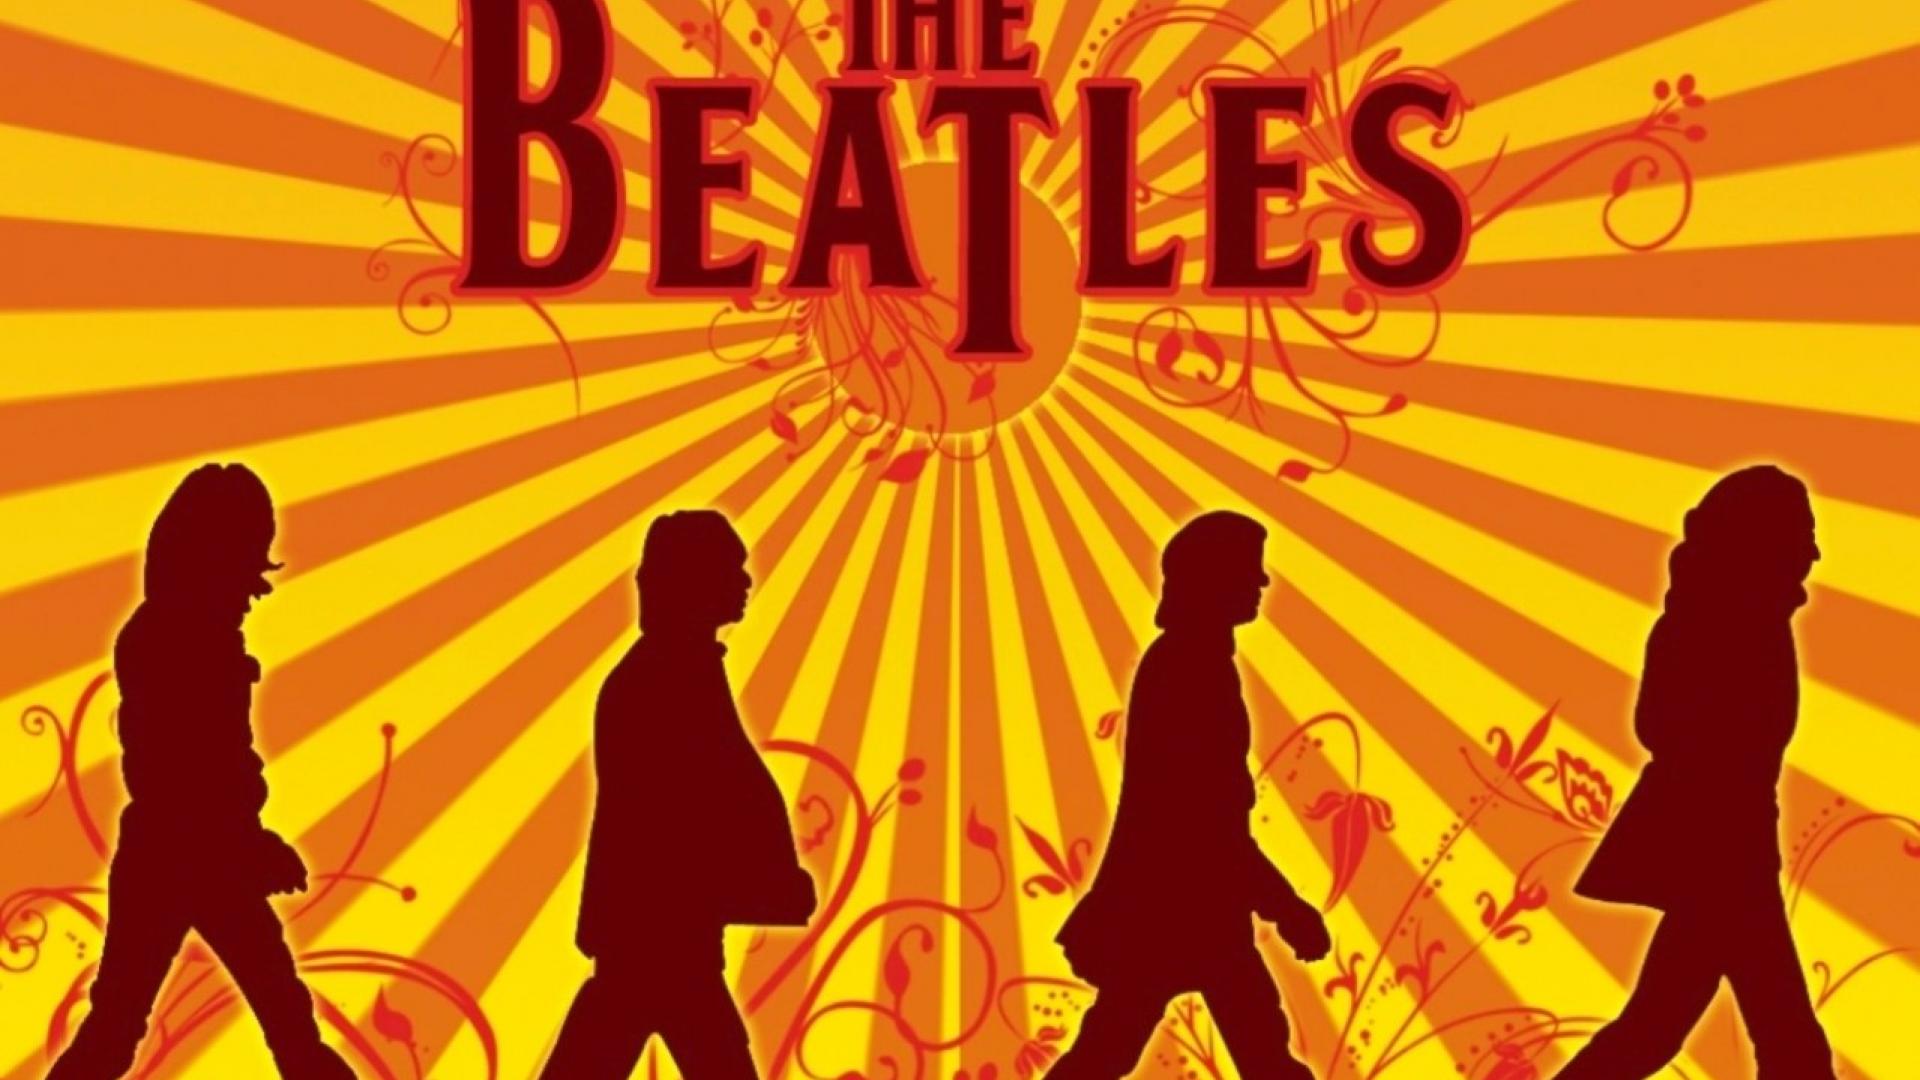 The Beatles Wallpaper Hq